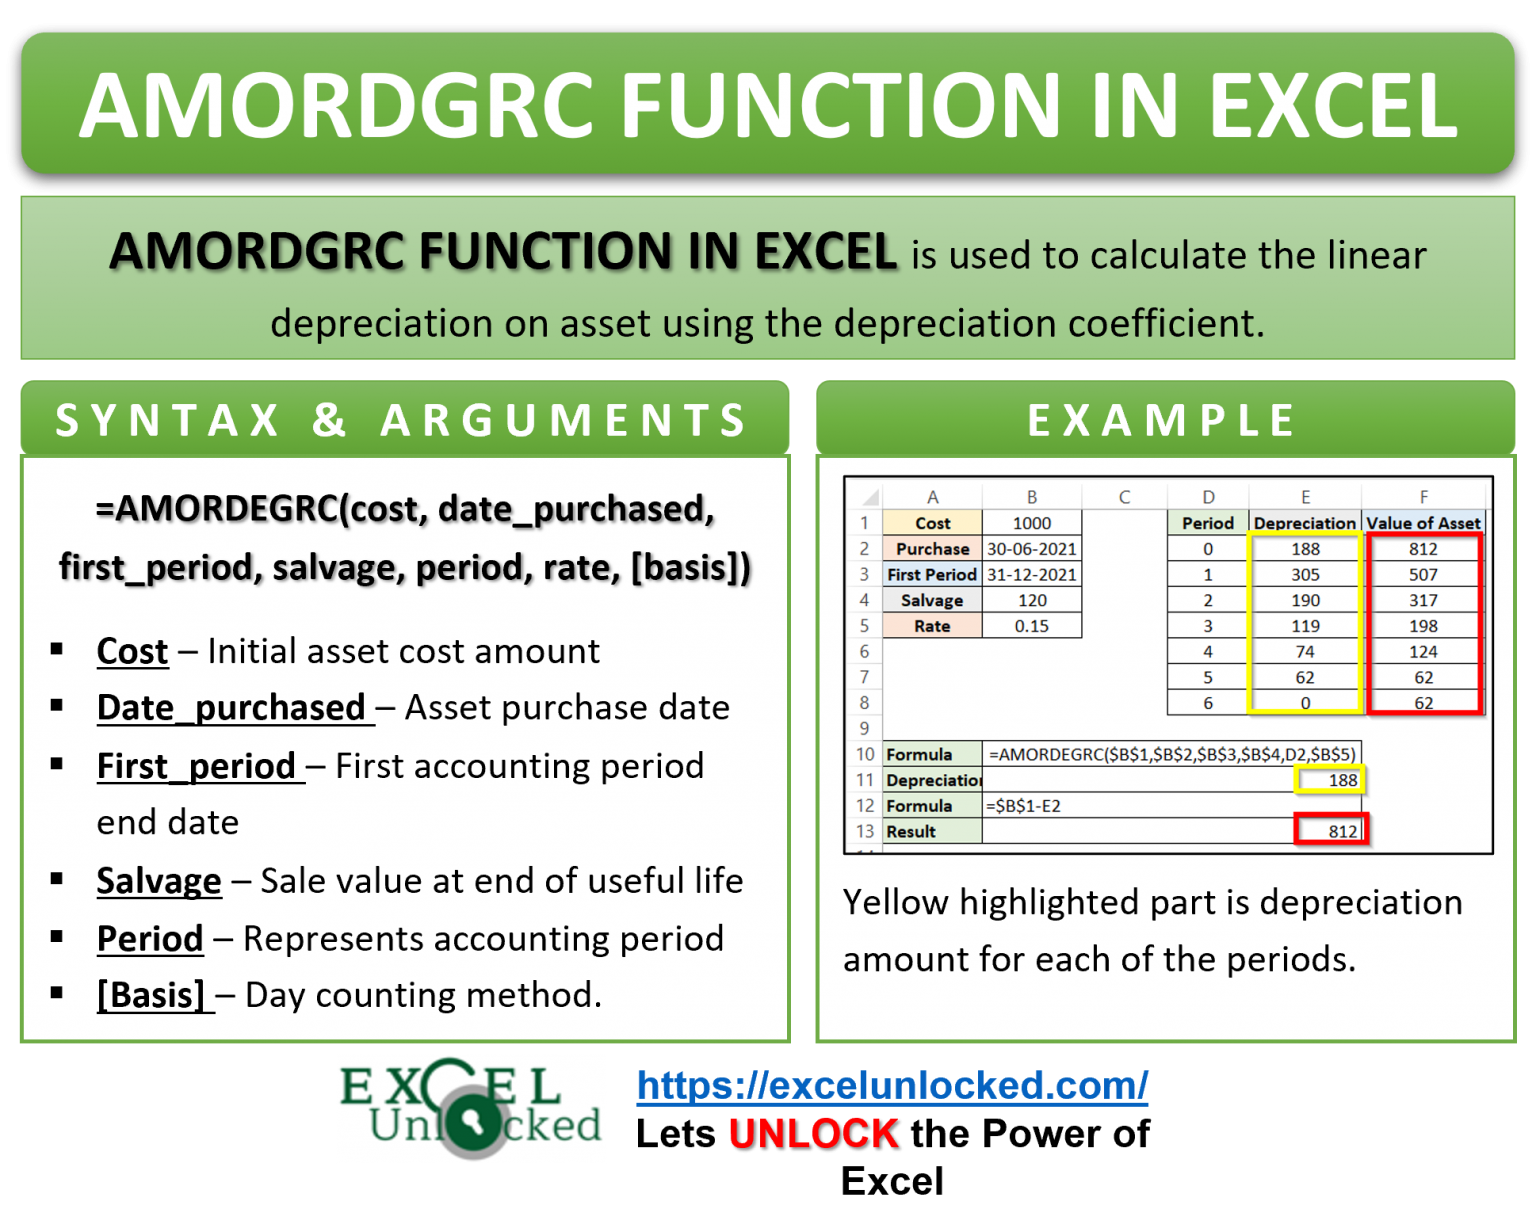 amordegrc-function-of-excel-depreciation-of-asset-excel-unlocked